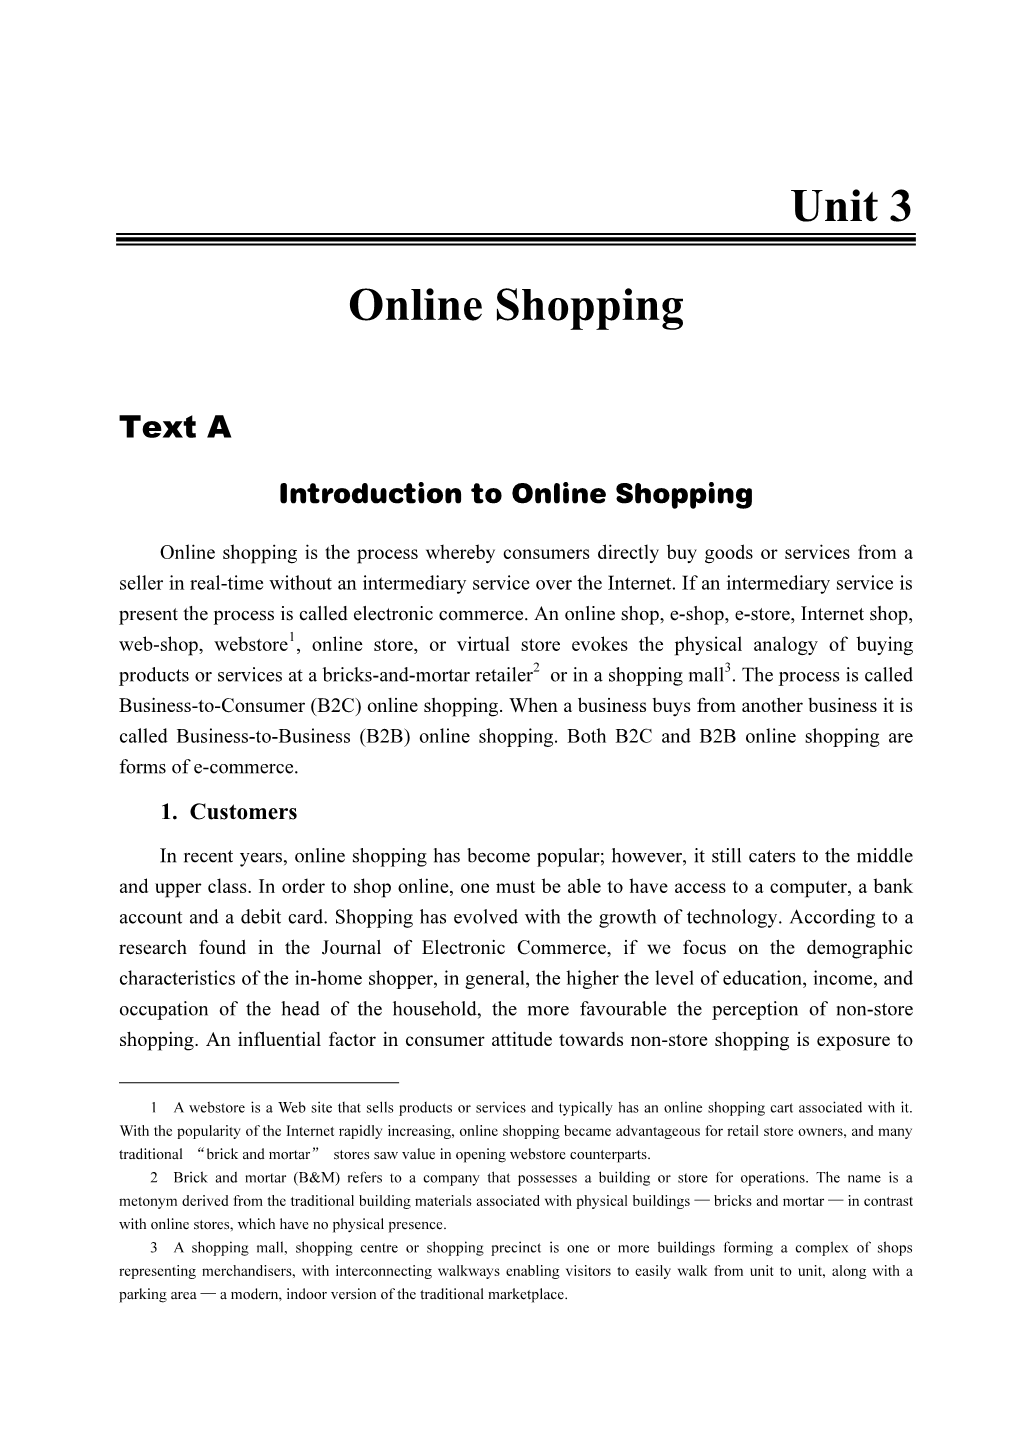 Unit 3 Online Shopping